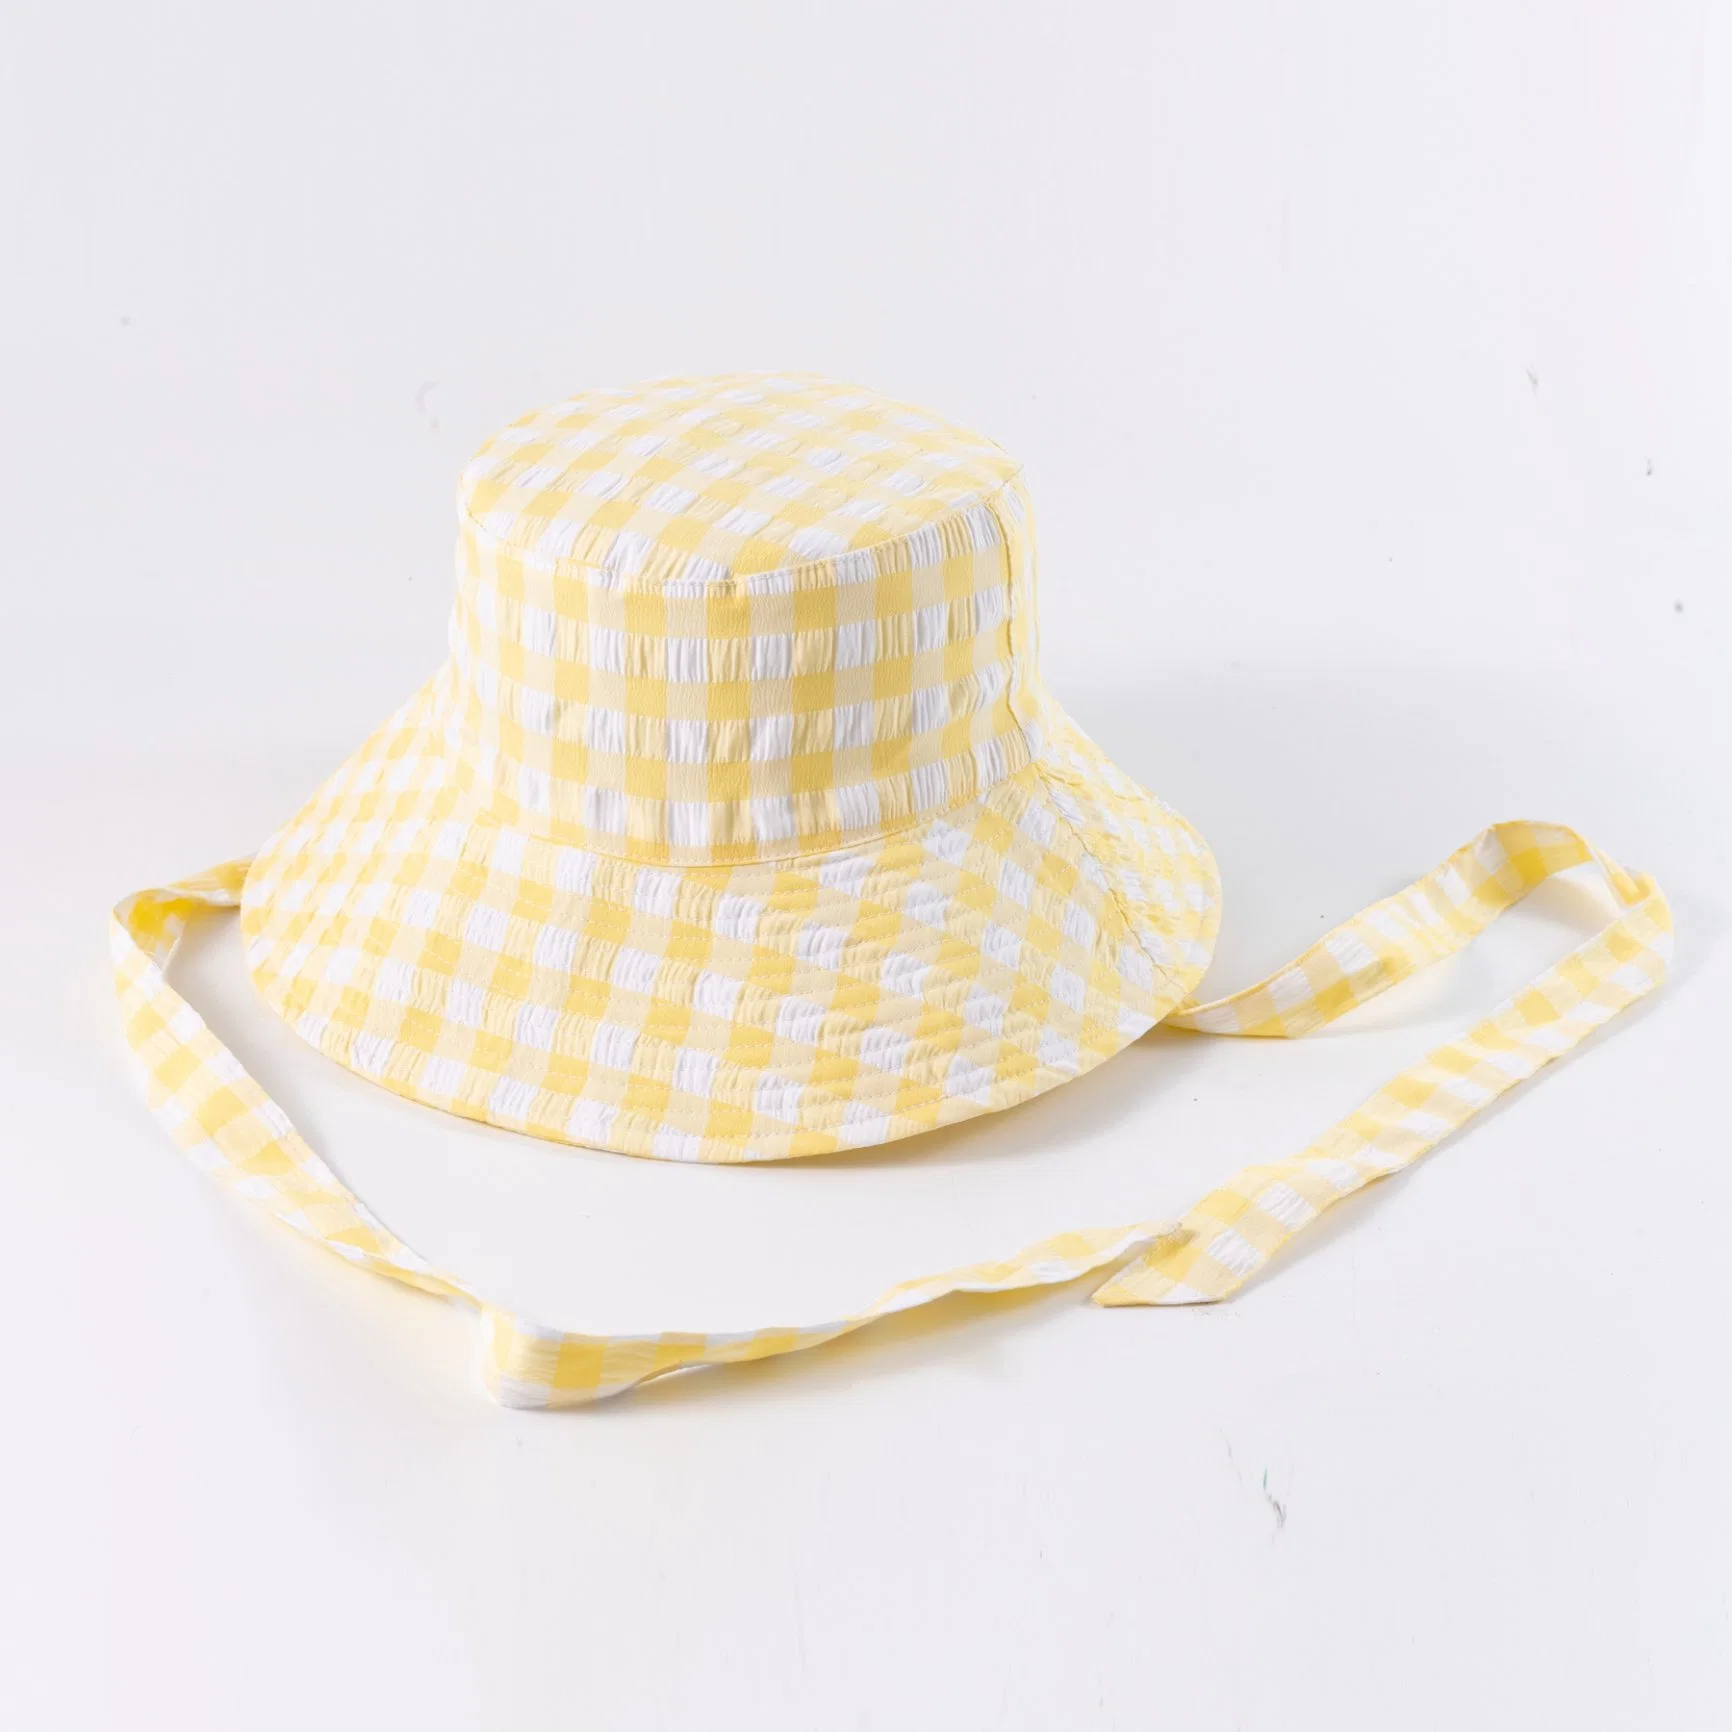 Unisex Customized Fashion Reversible Summer Outdoor Beach Bucket Hat